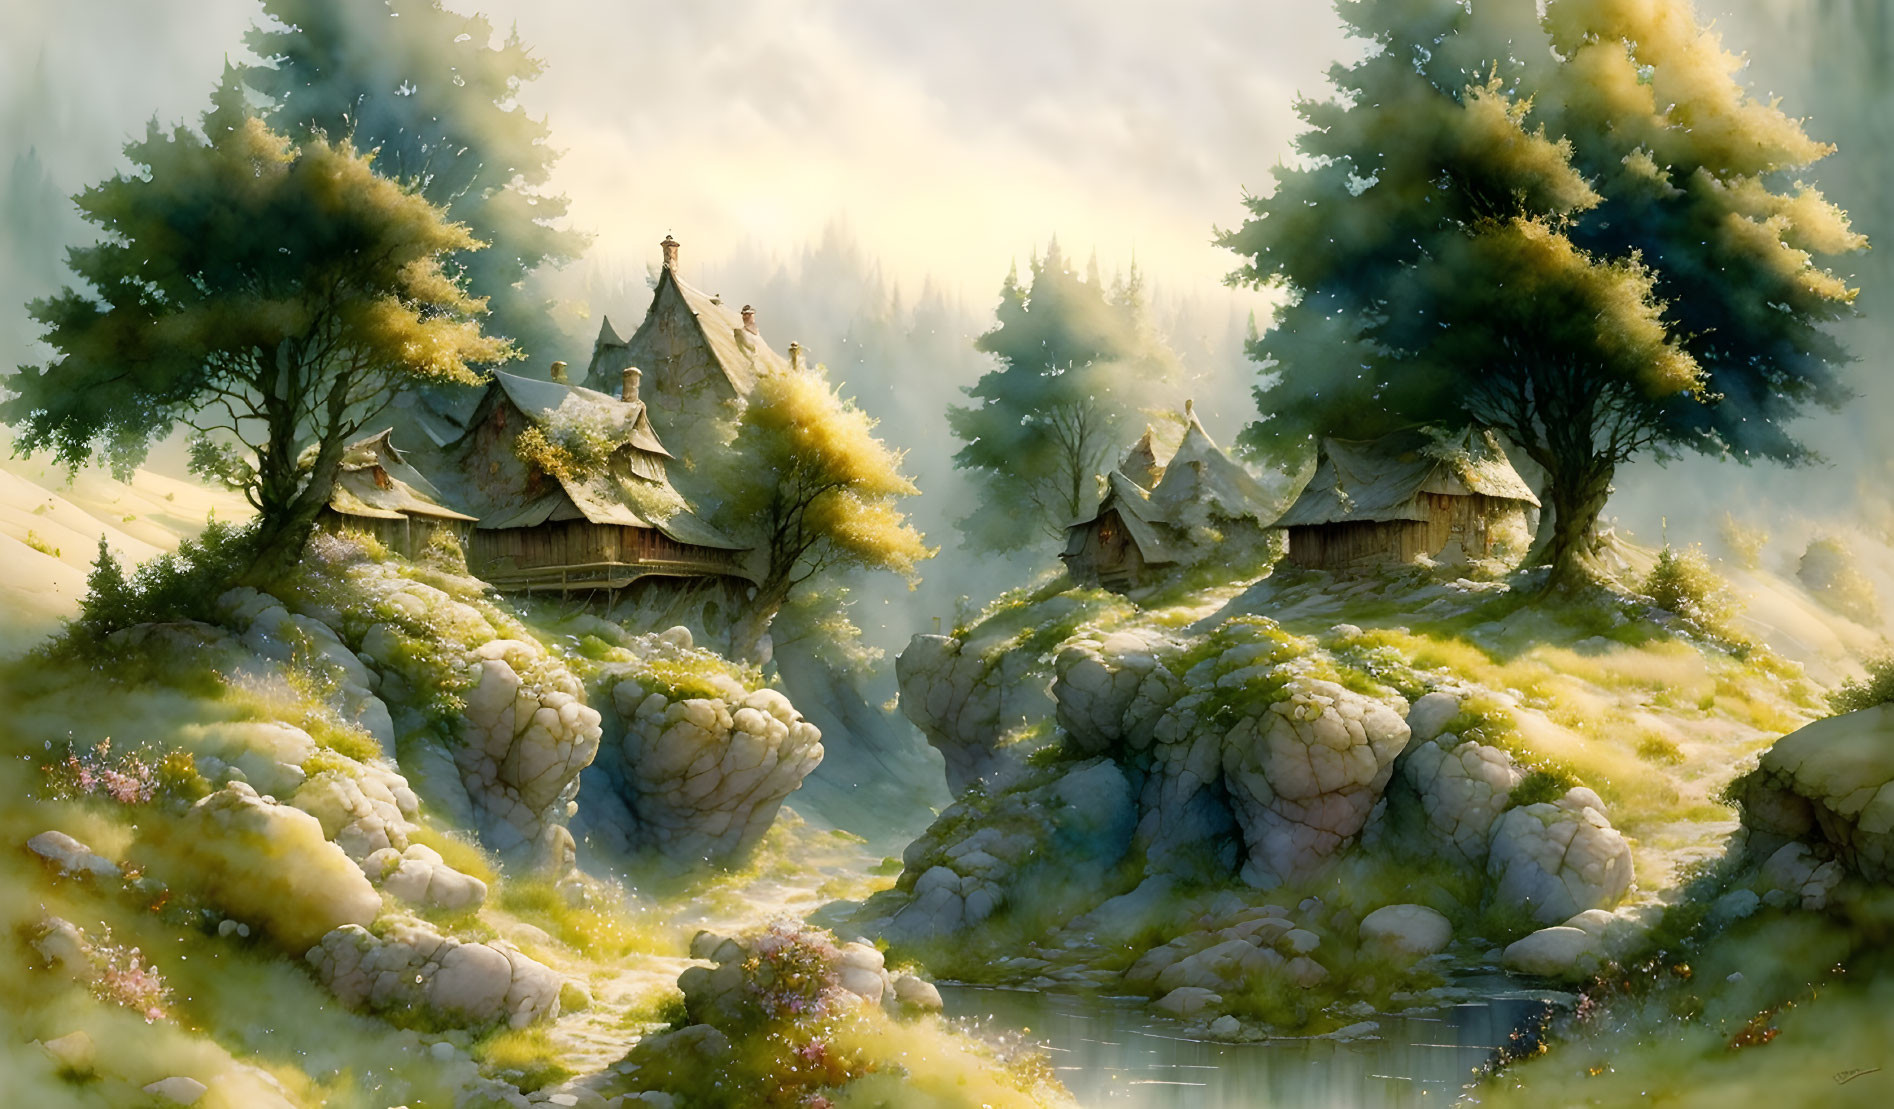 Fantasy landscape: stone cottages on boulders, lush greenery, misty ambiance